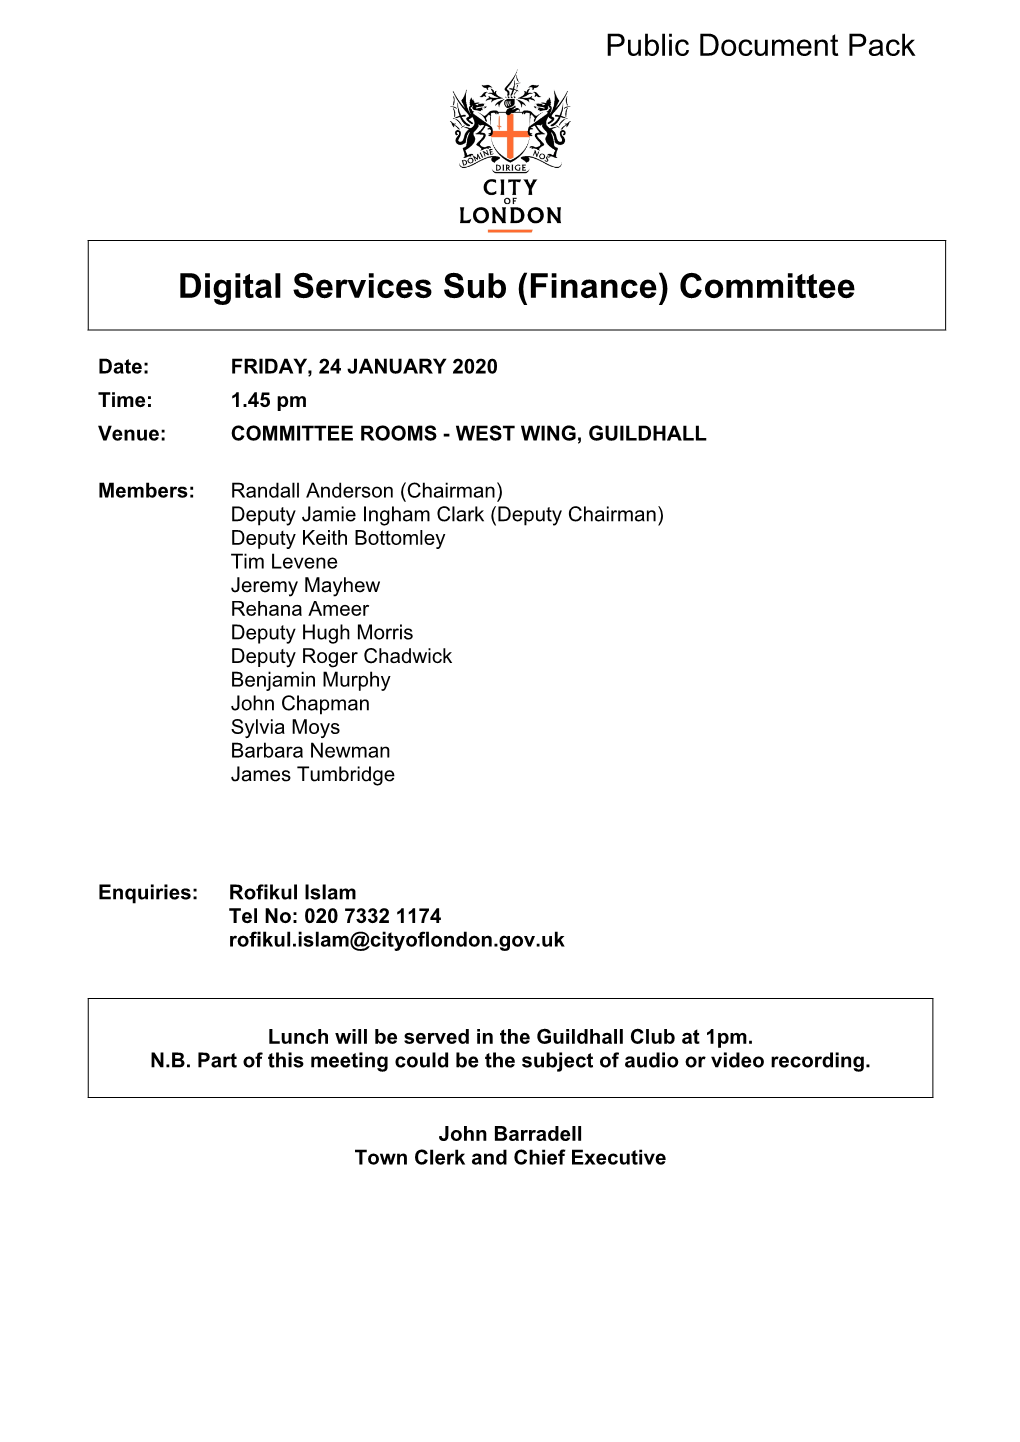 (Public Pack)Agenda Document for Digital Services Sub (Finance